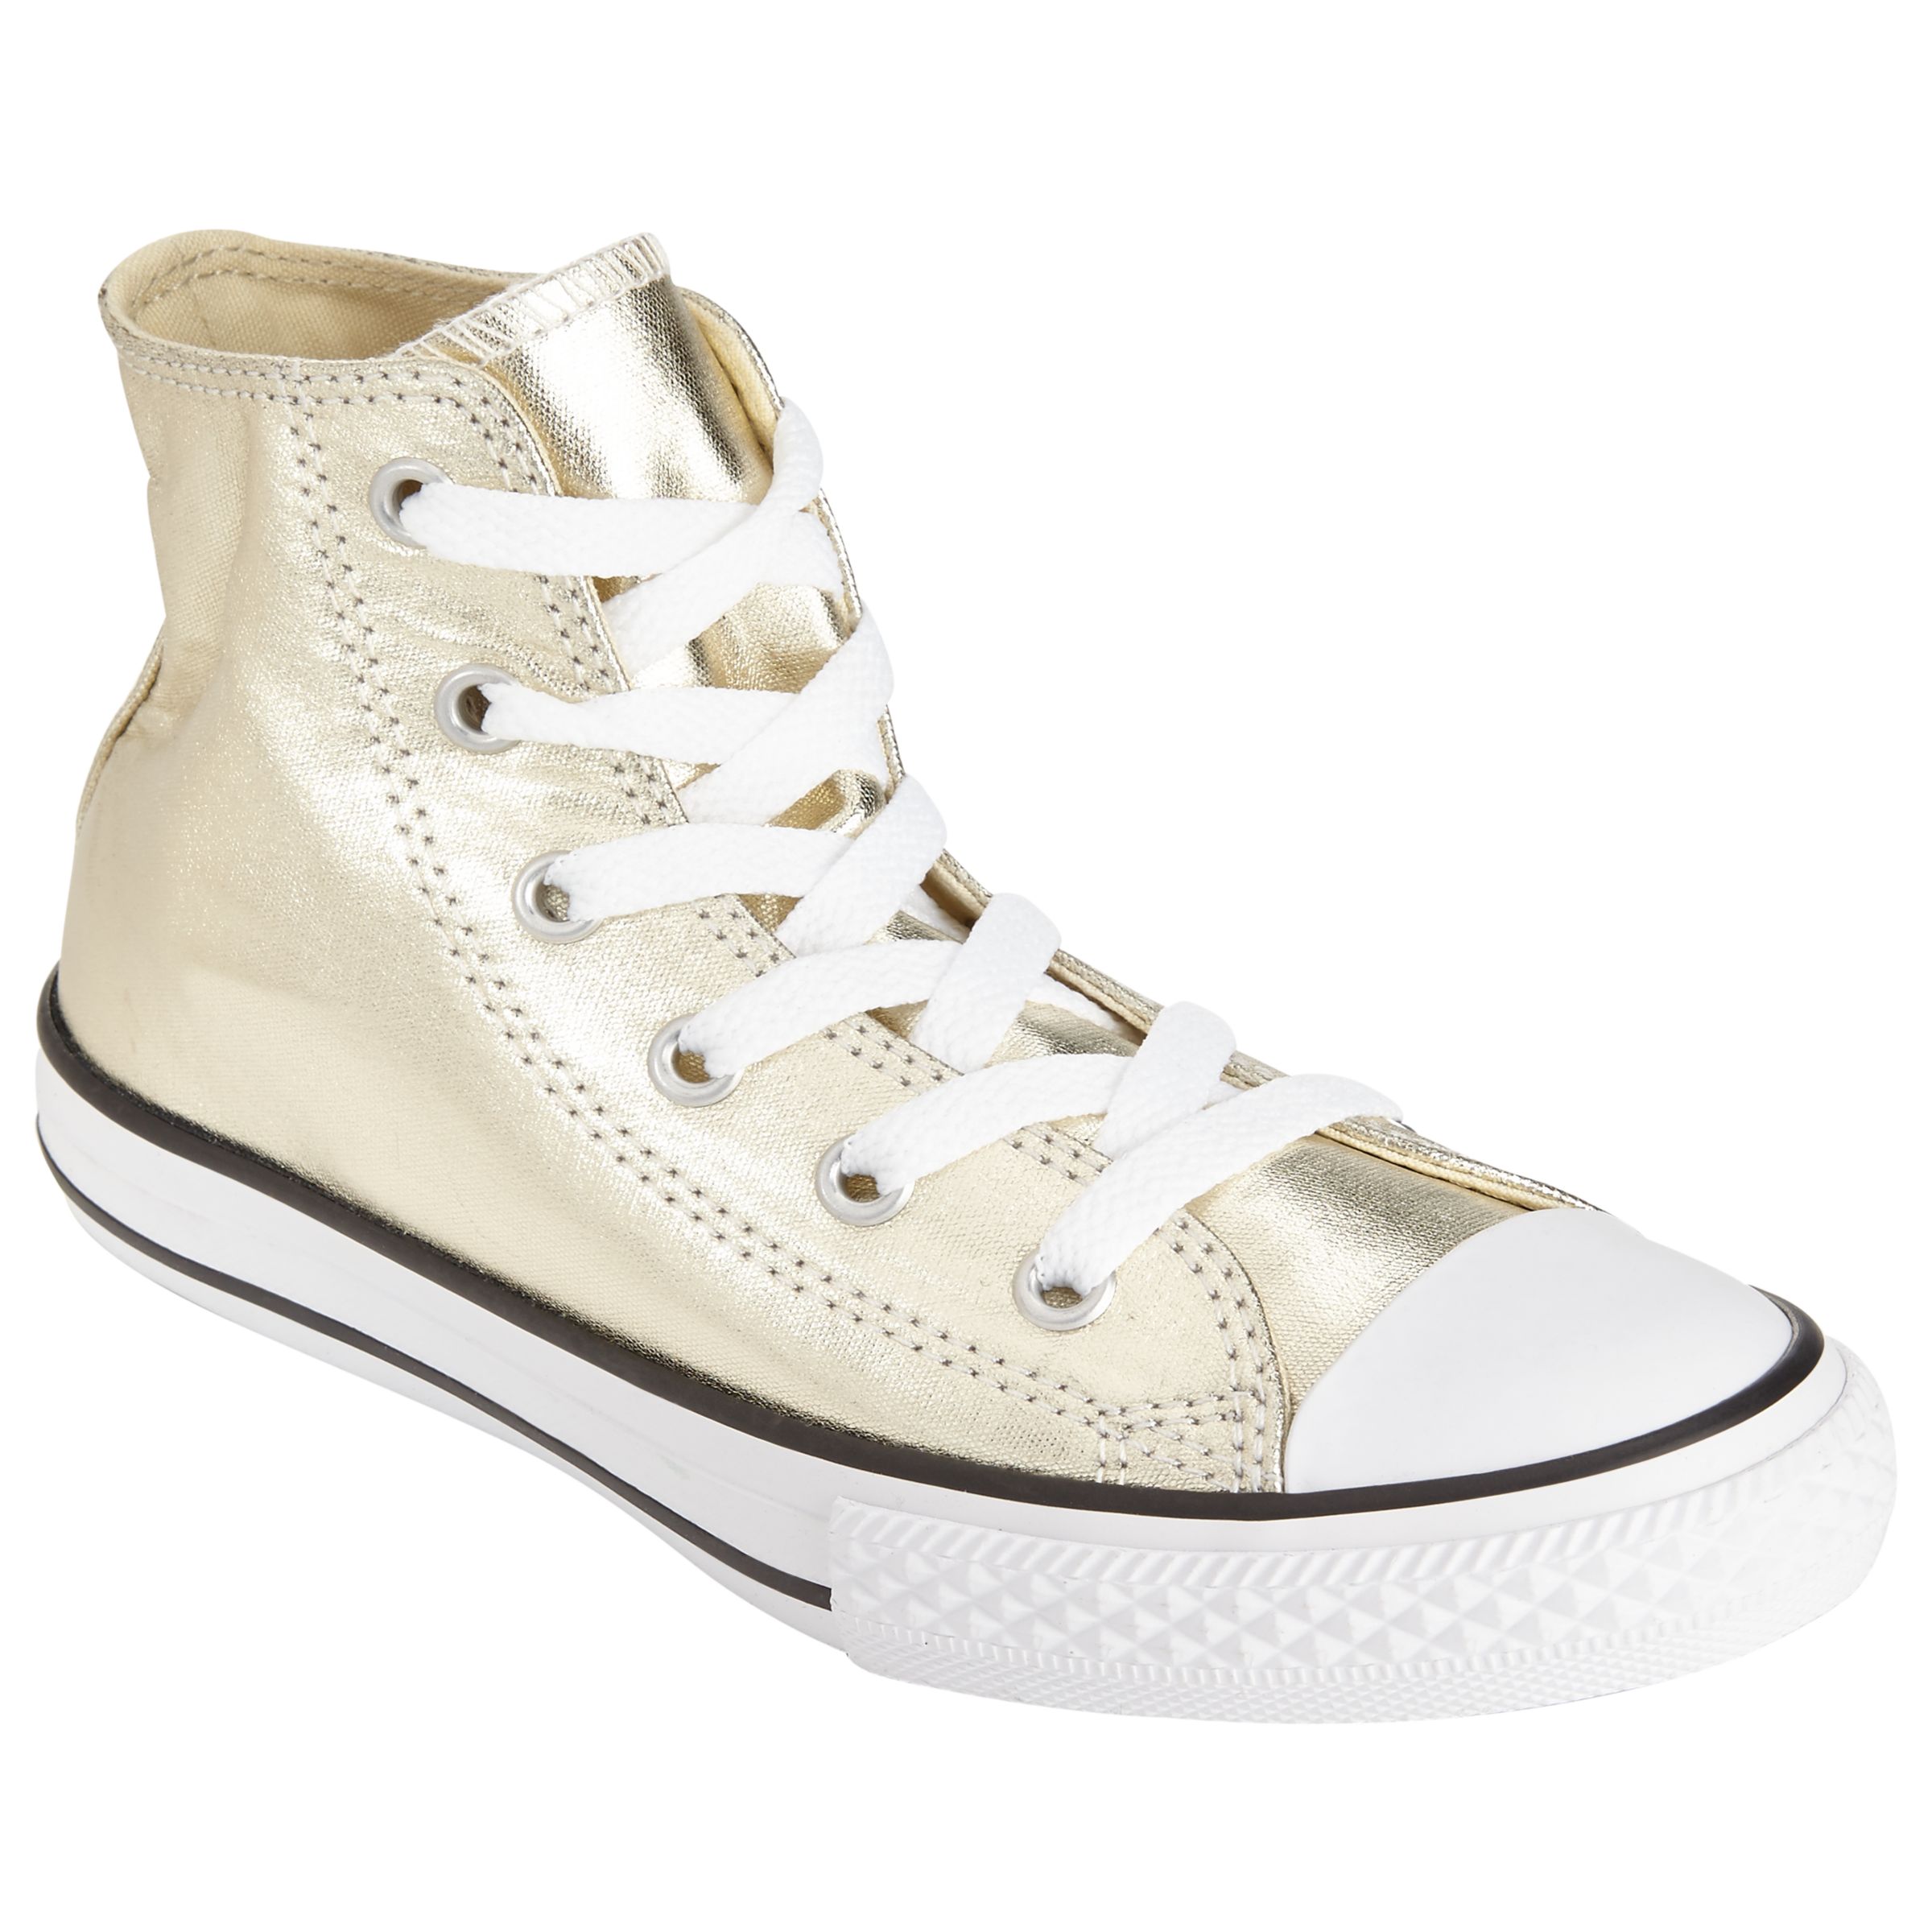 Converse Children's Hi Top Chuck Taylor Metallic Shoes, Light Gold, 4